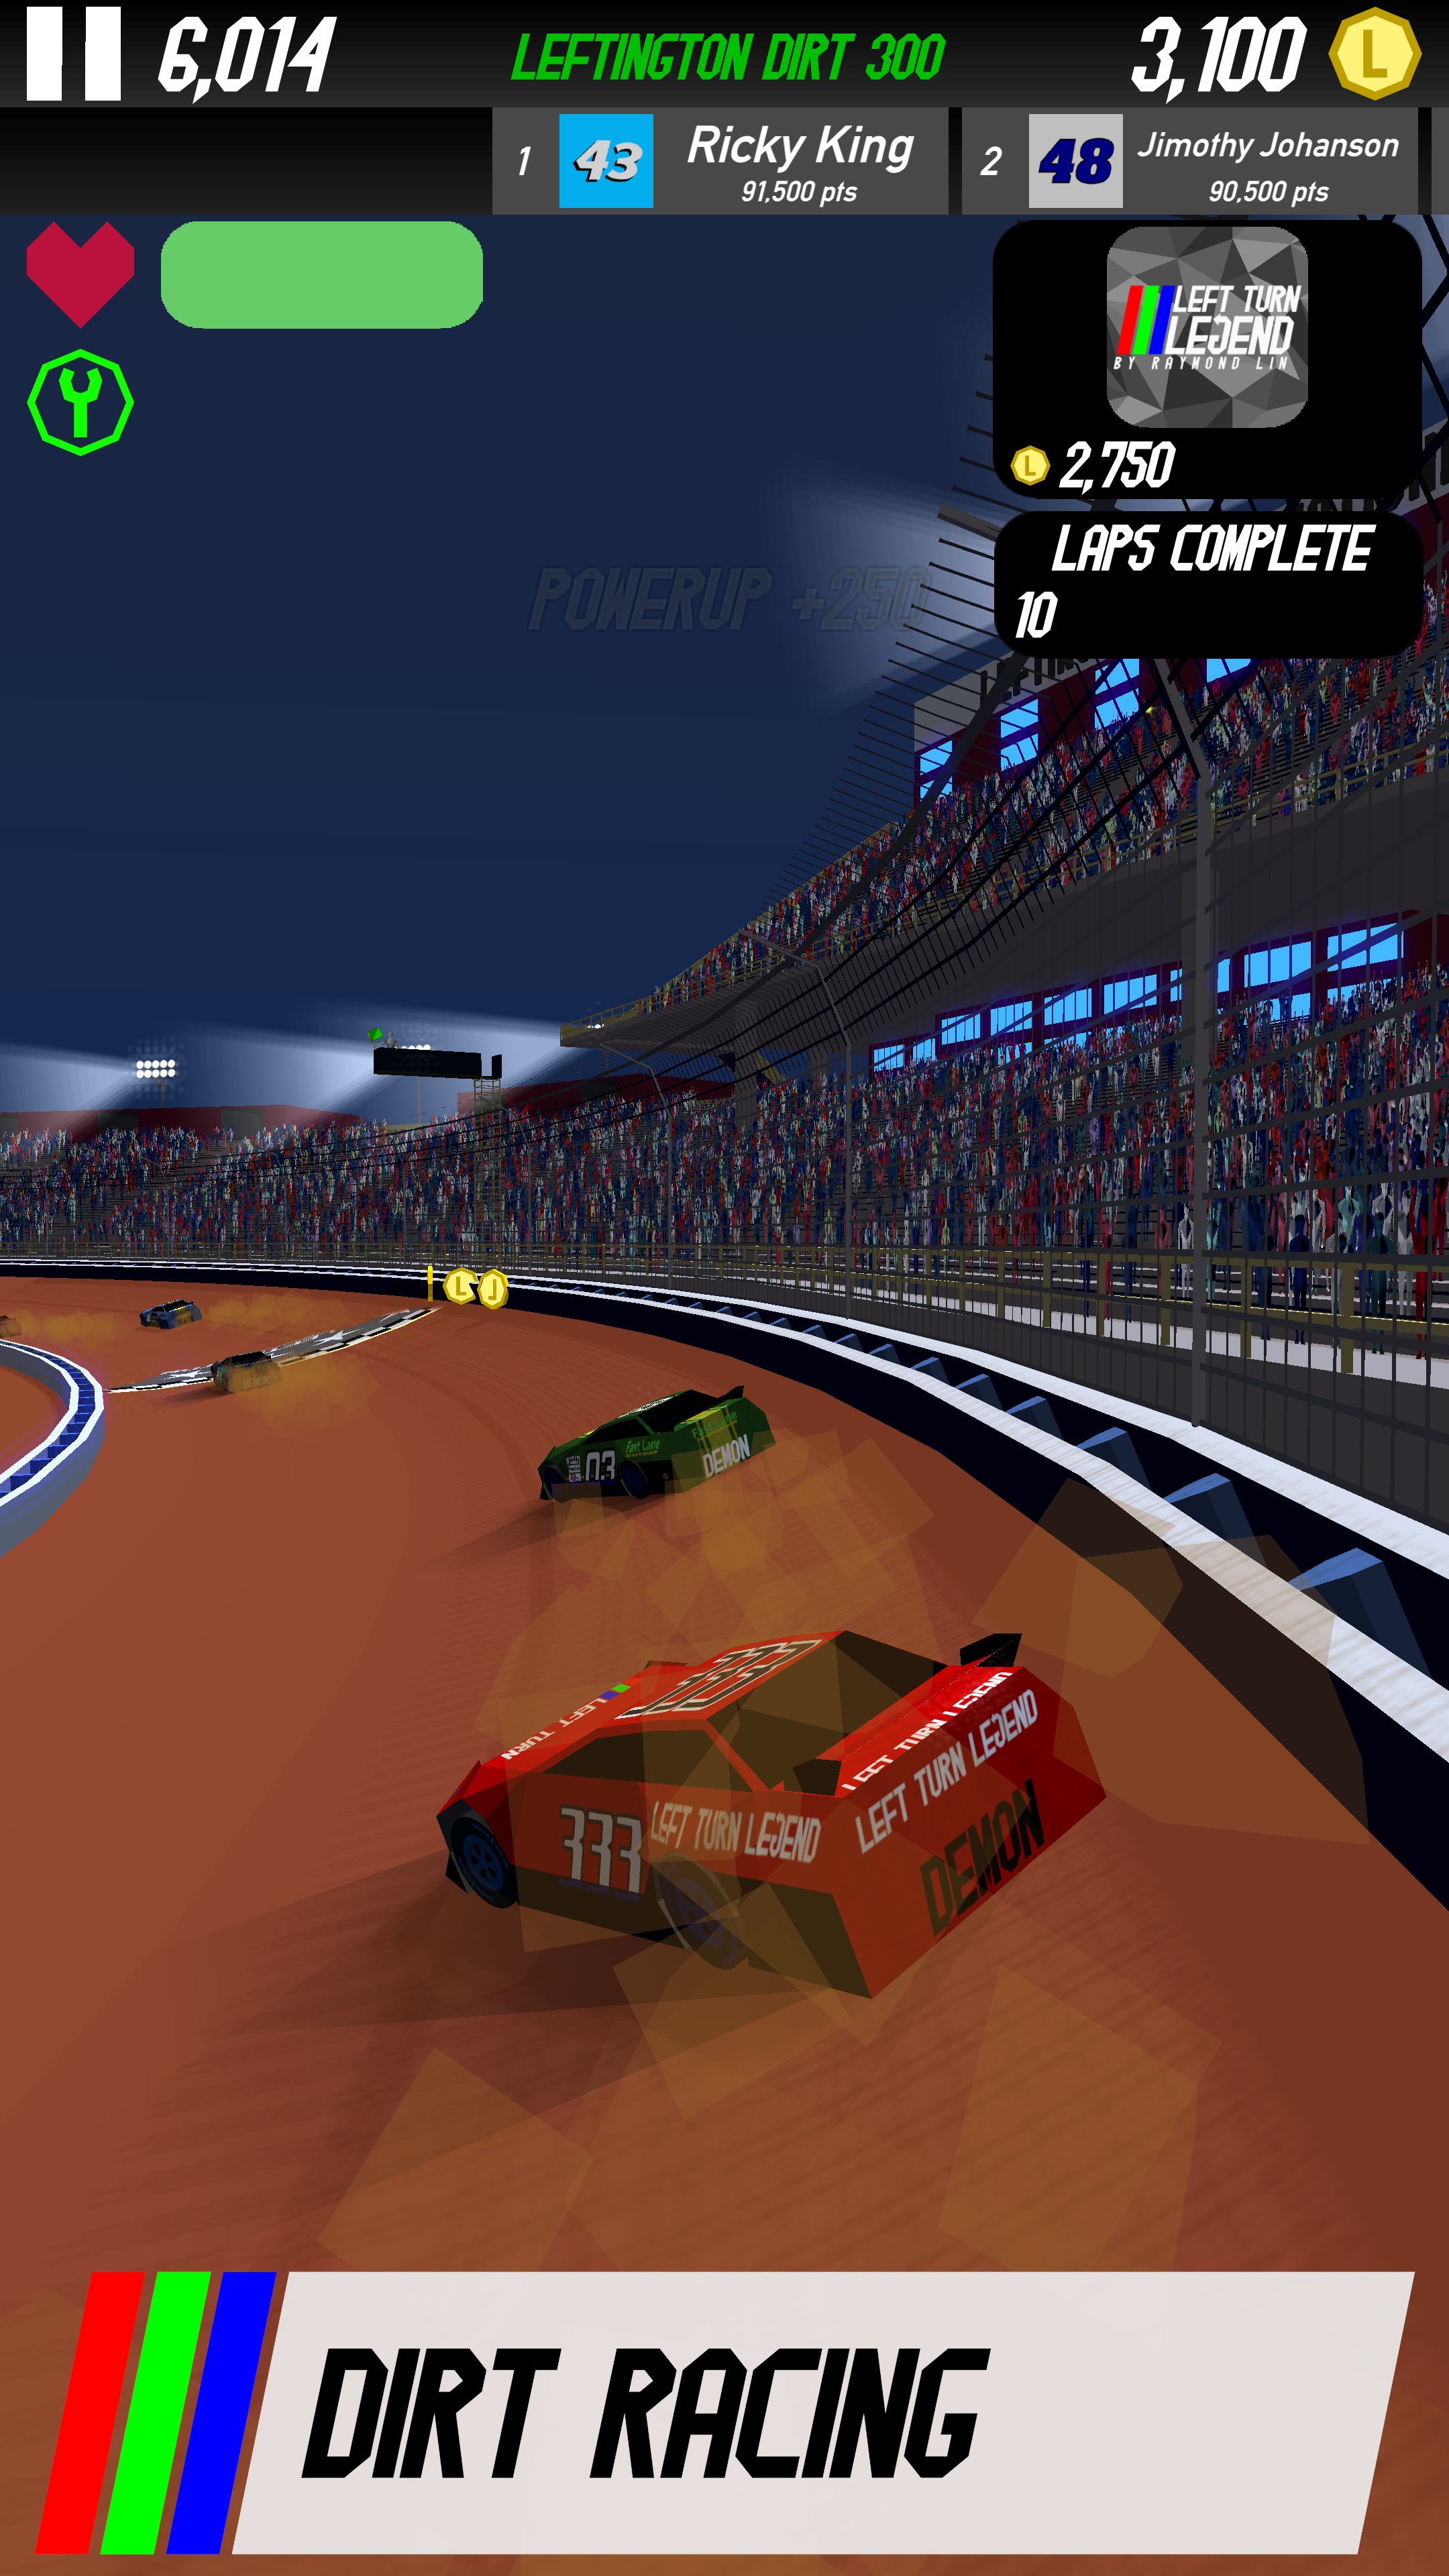 Left Turn Legend screenshot game